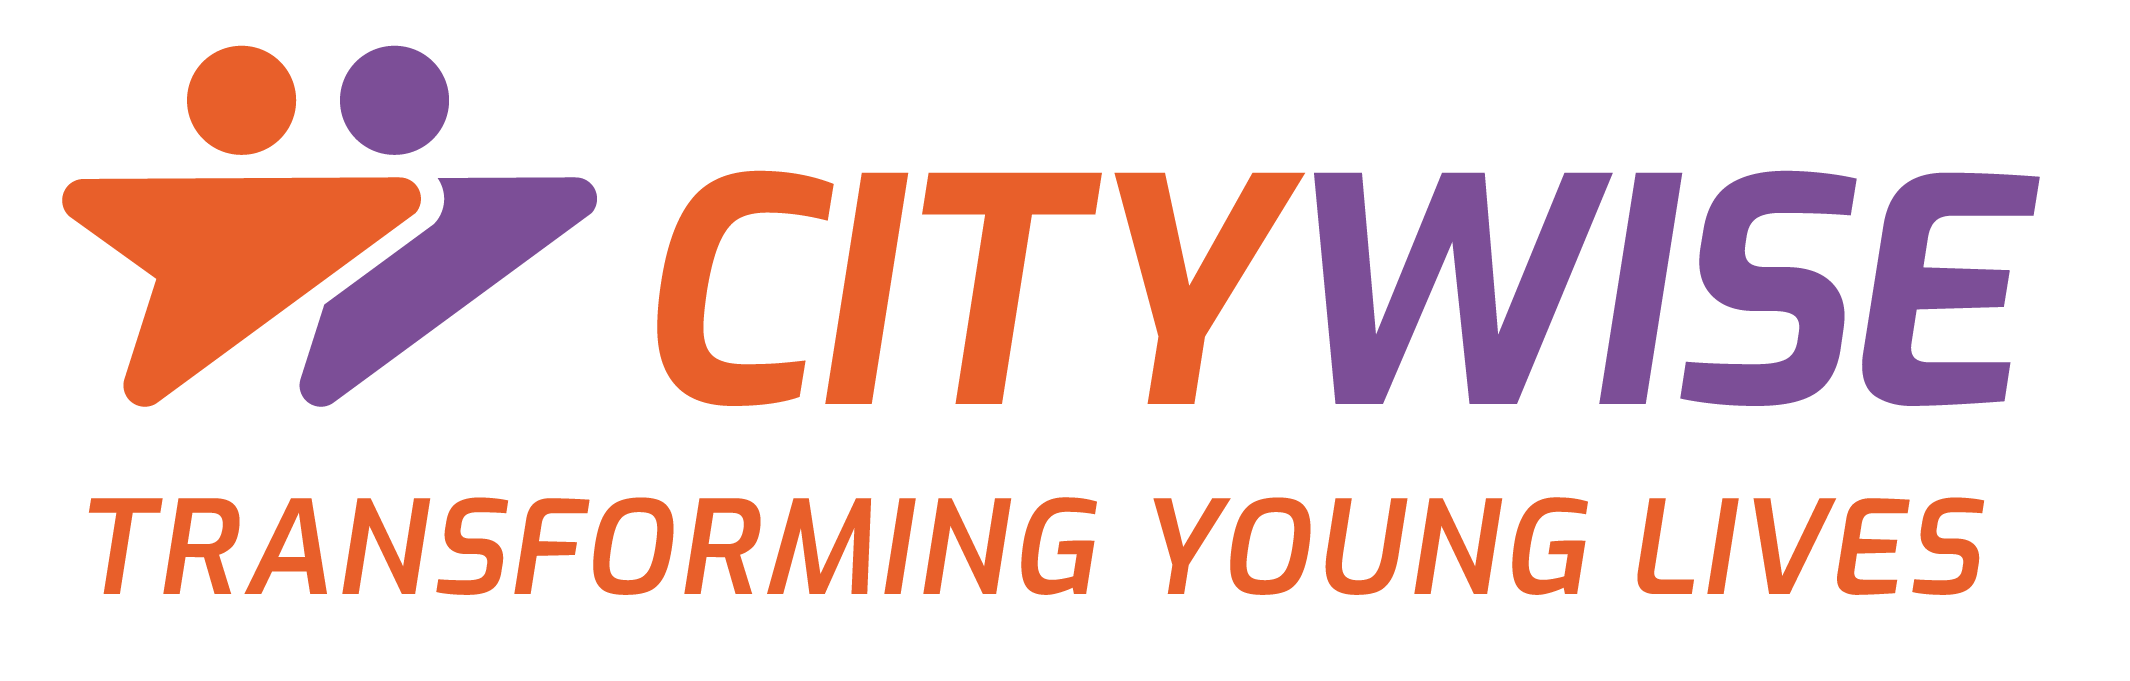 citywise logo